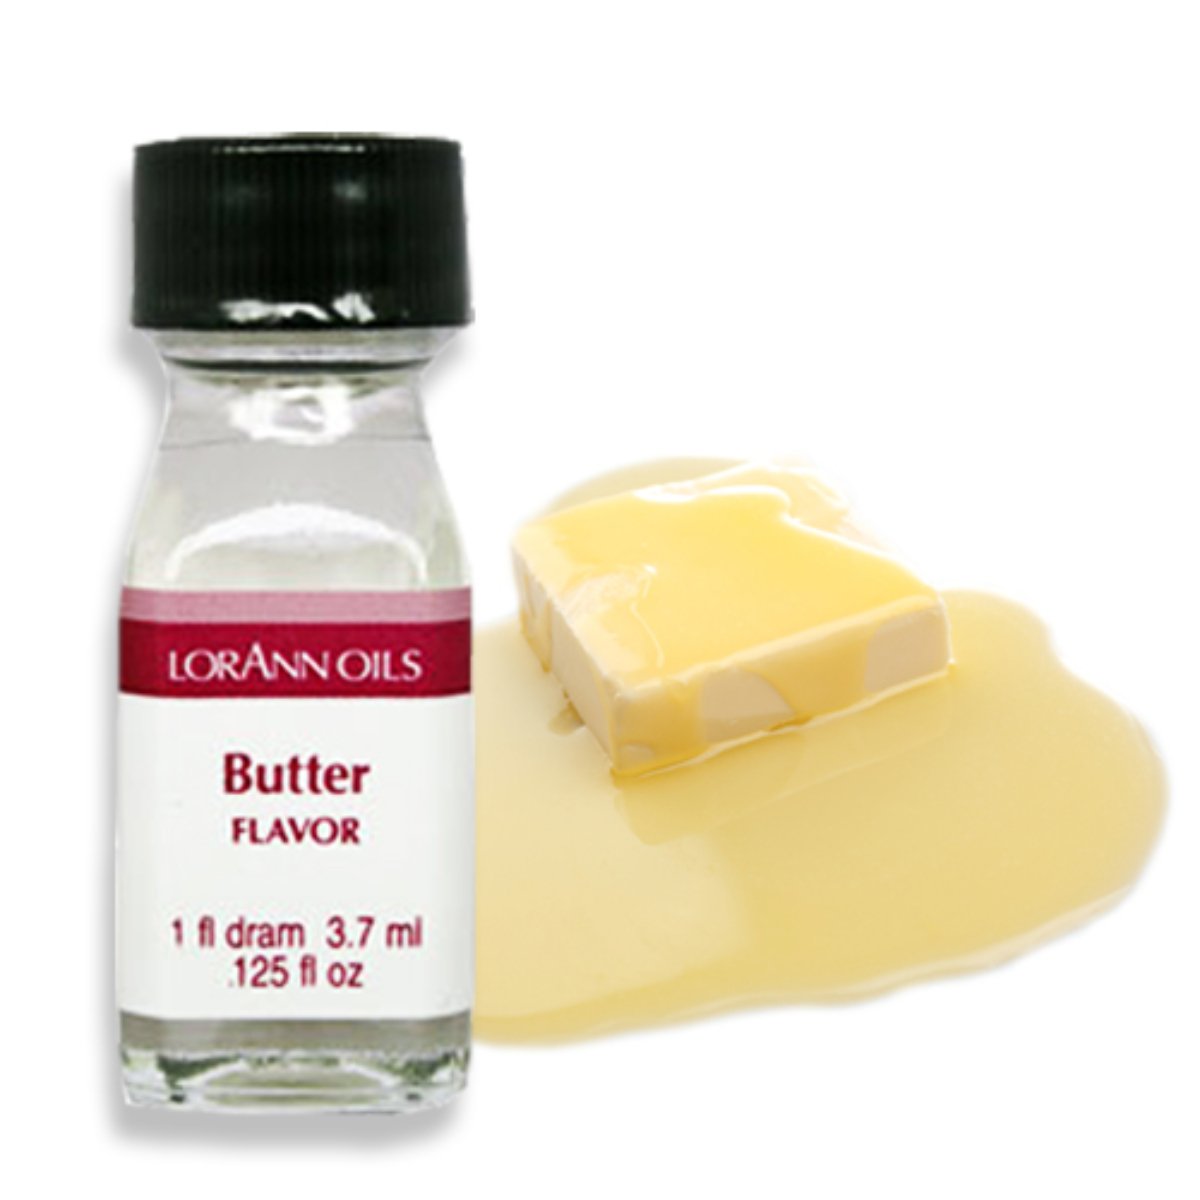 Butter Flavor 1 Dram - Bake Supply Plus